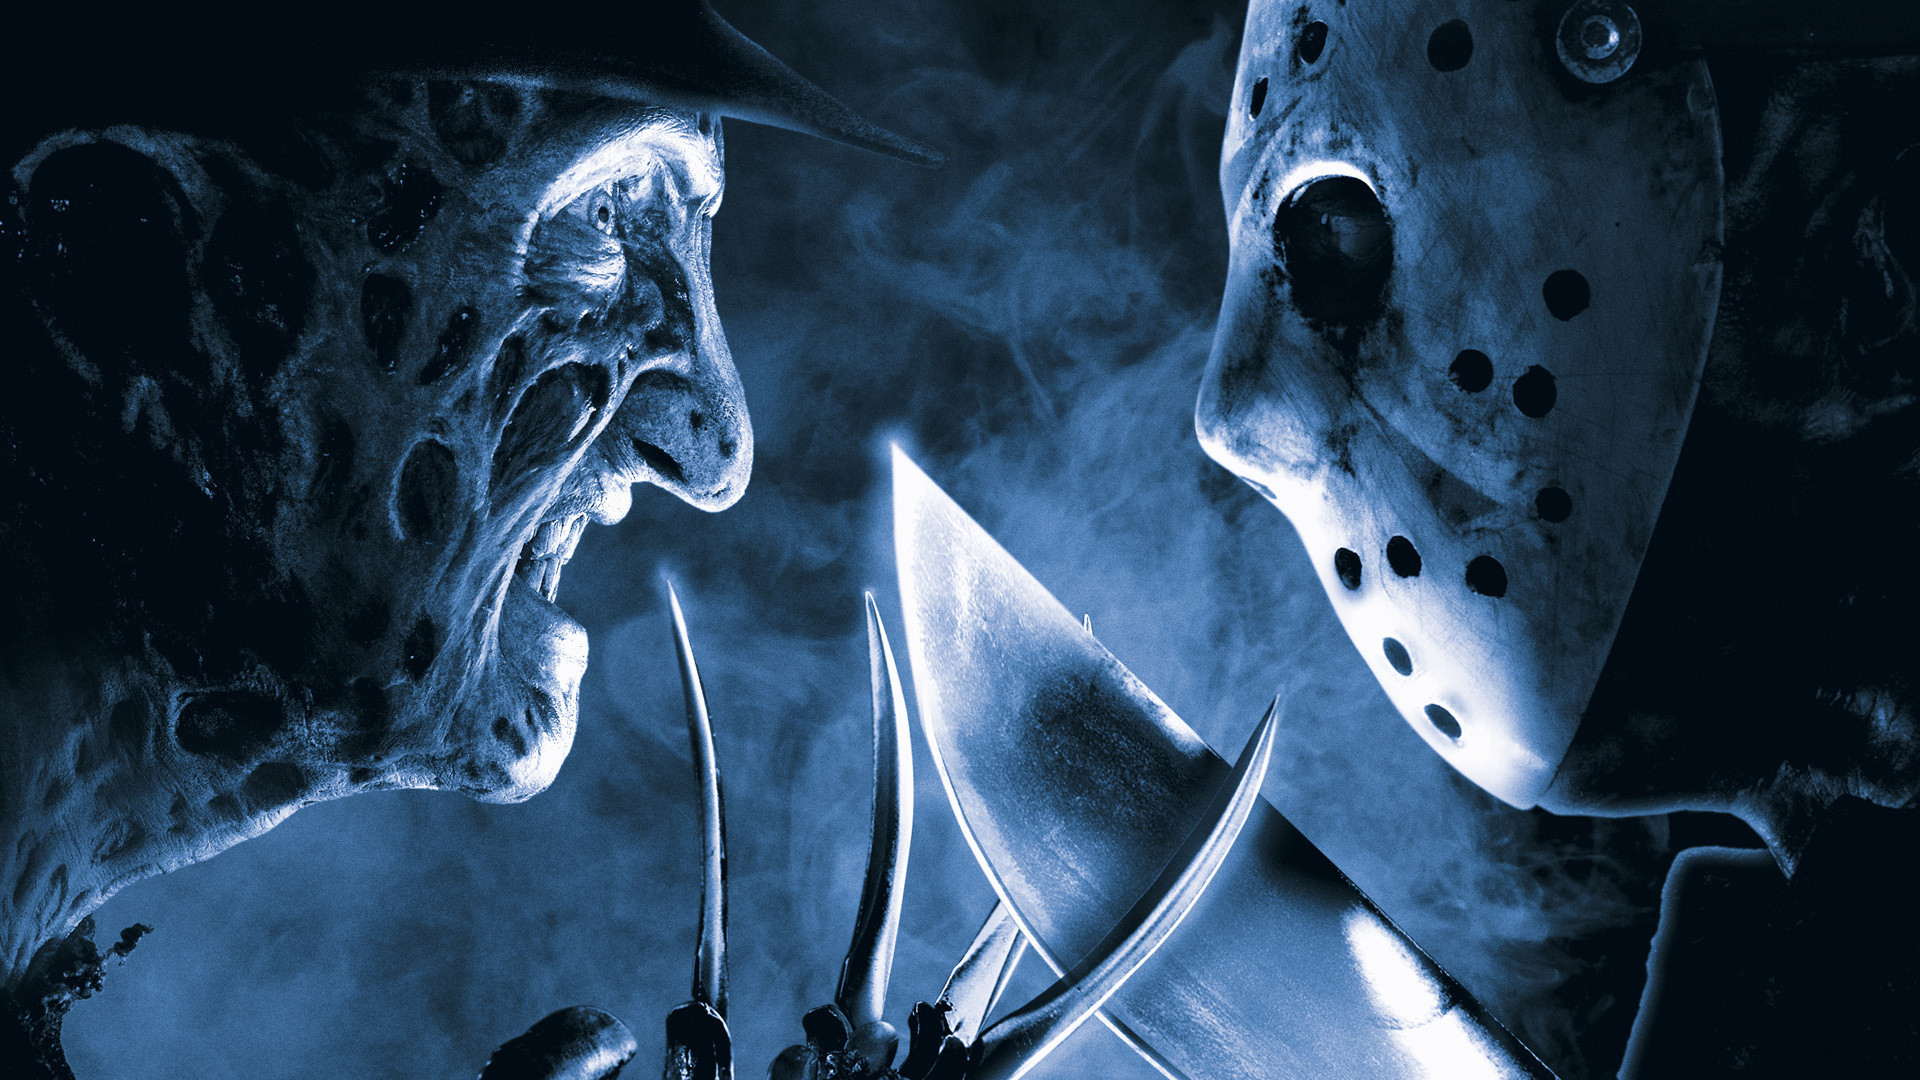 Movie Freddy vs. Jason HD Wallpaper | Background Image